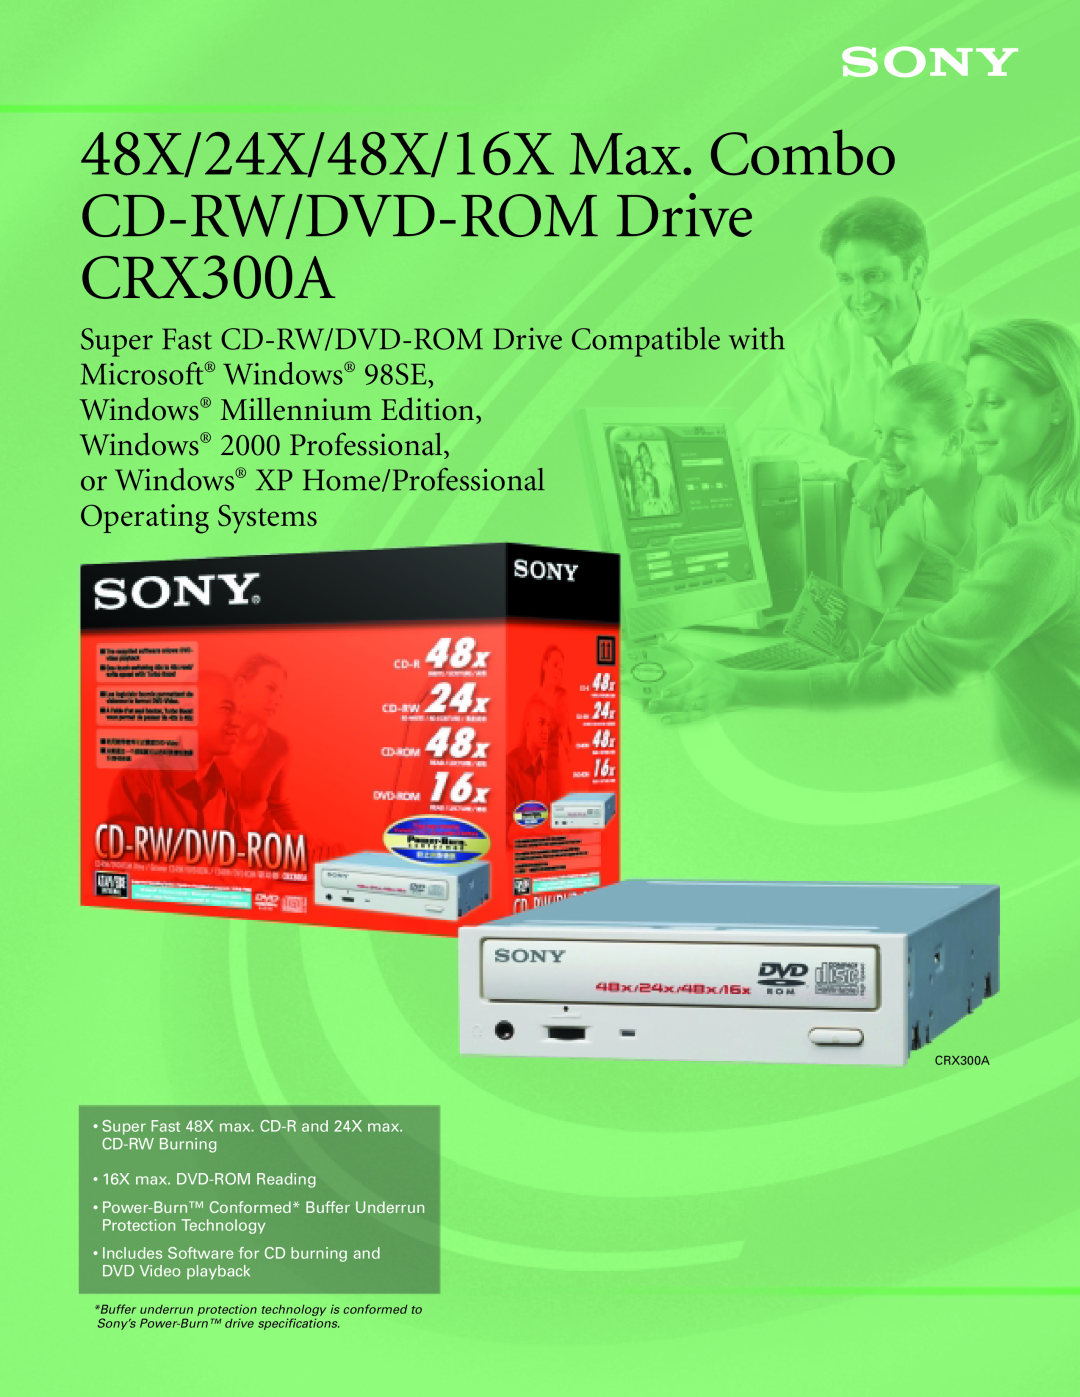 Sony specifications 48X/24X/48X/16X Max. Combo CD-RW/DVD-ROM Drive CRX300A, 16X max. DVD-ROM Reading 